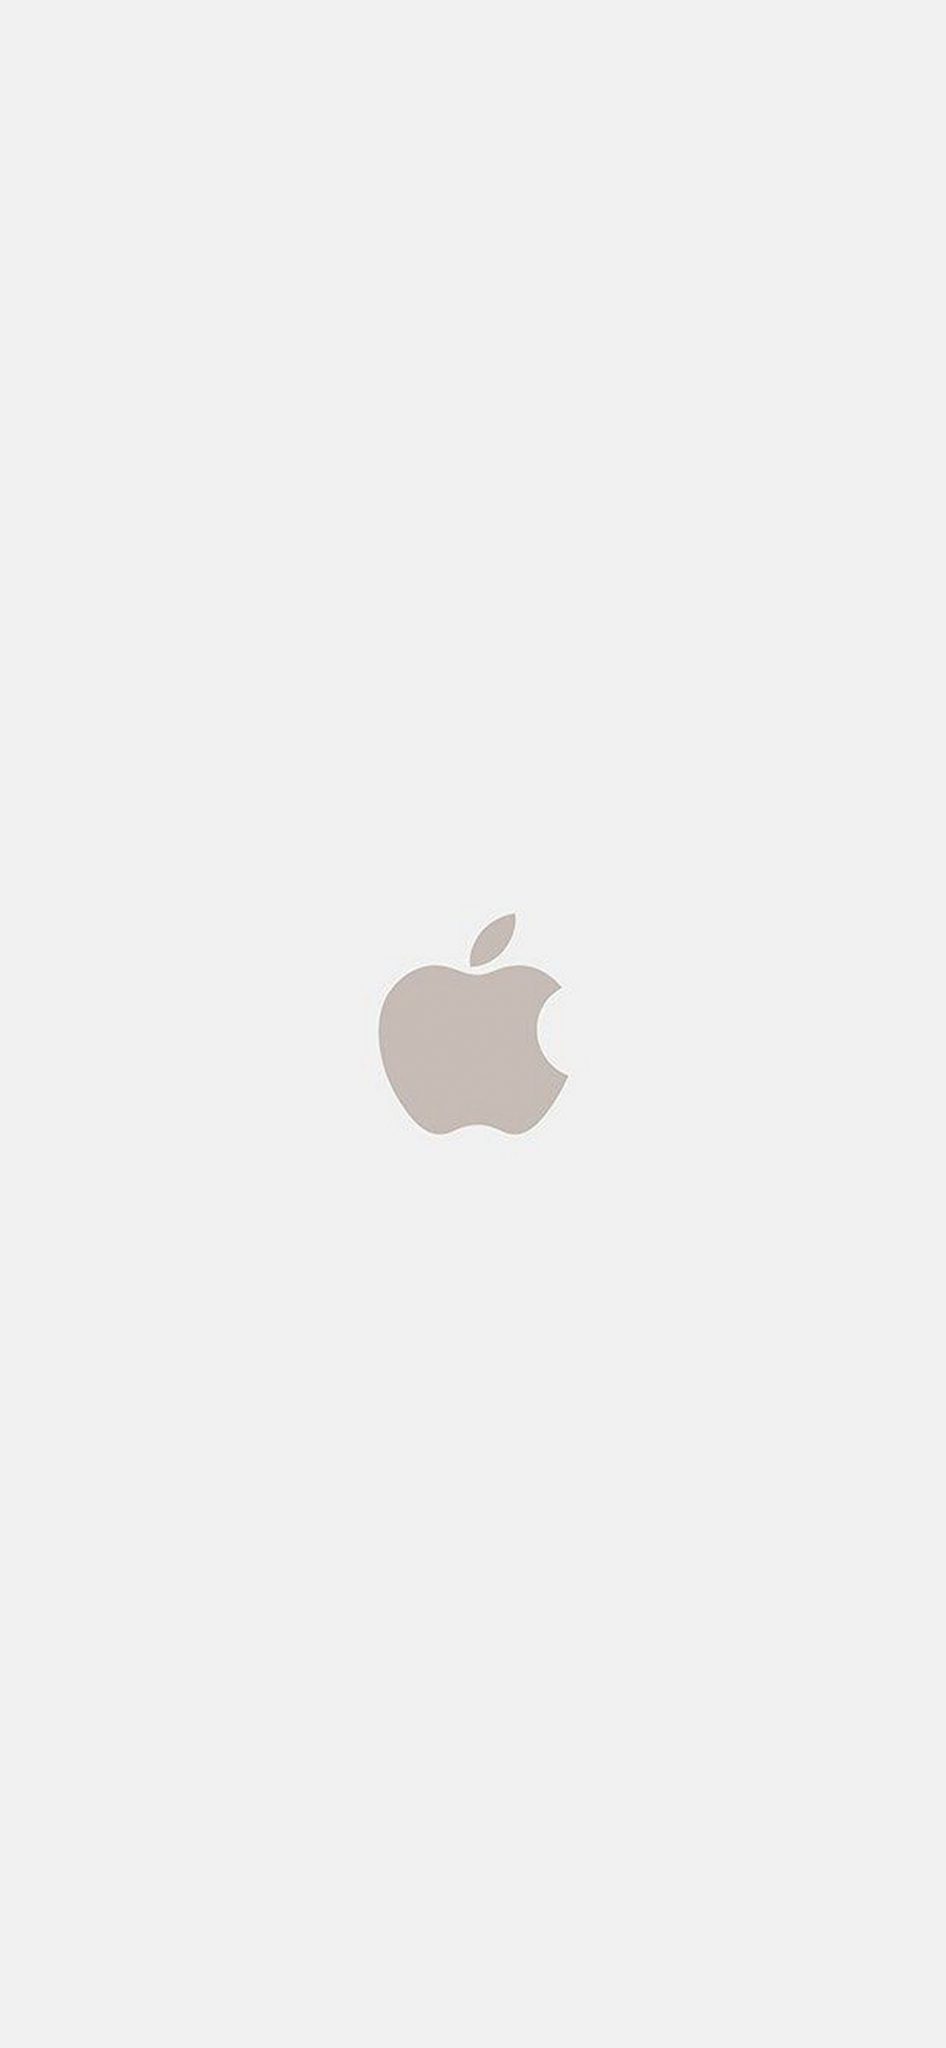 Apple Logo iPhone Wallpaper - 09